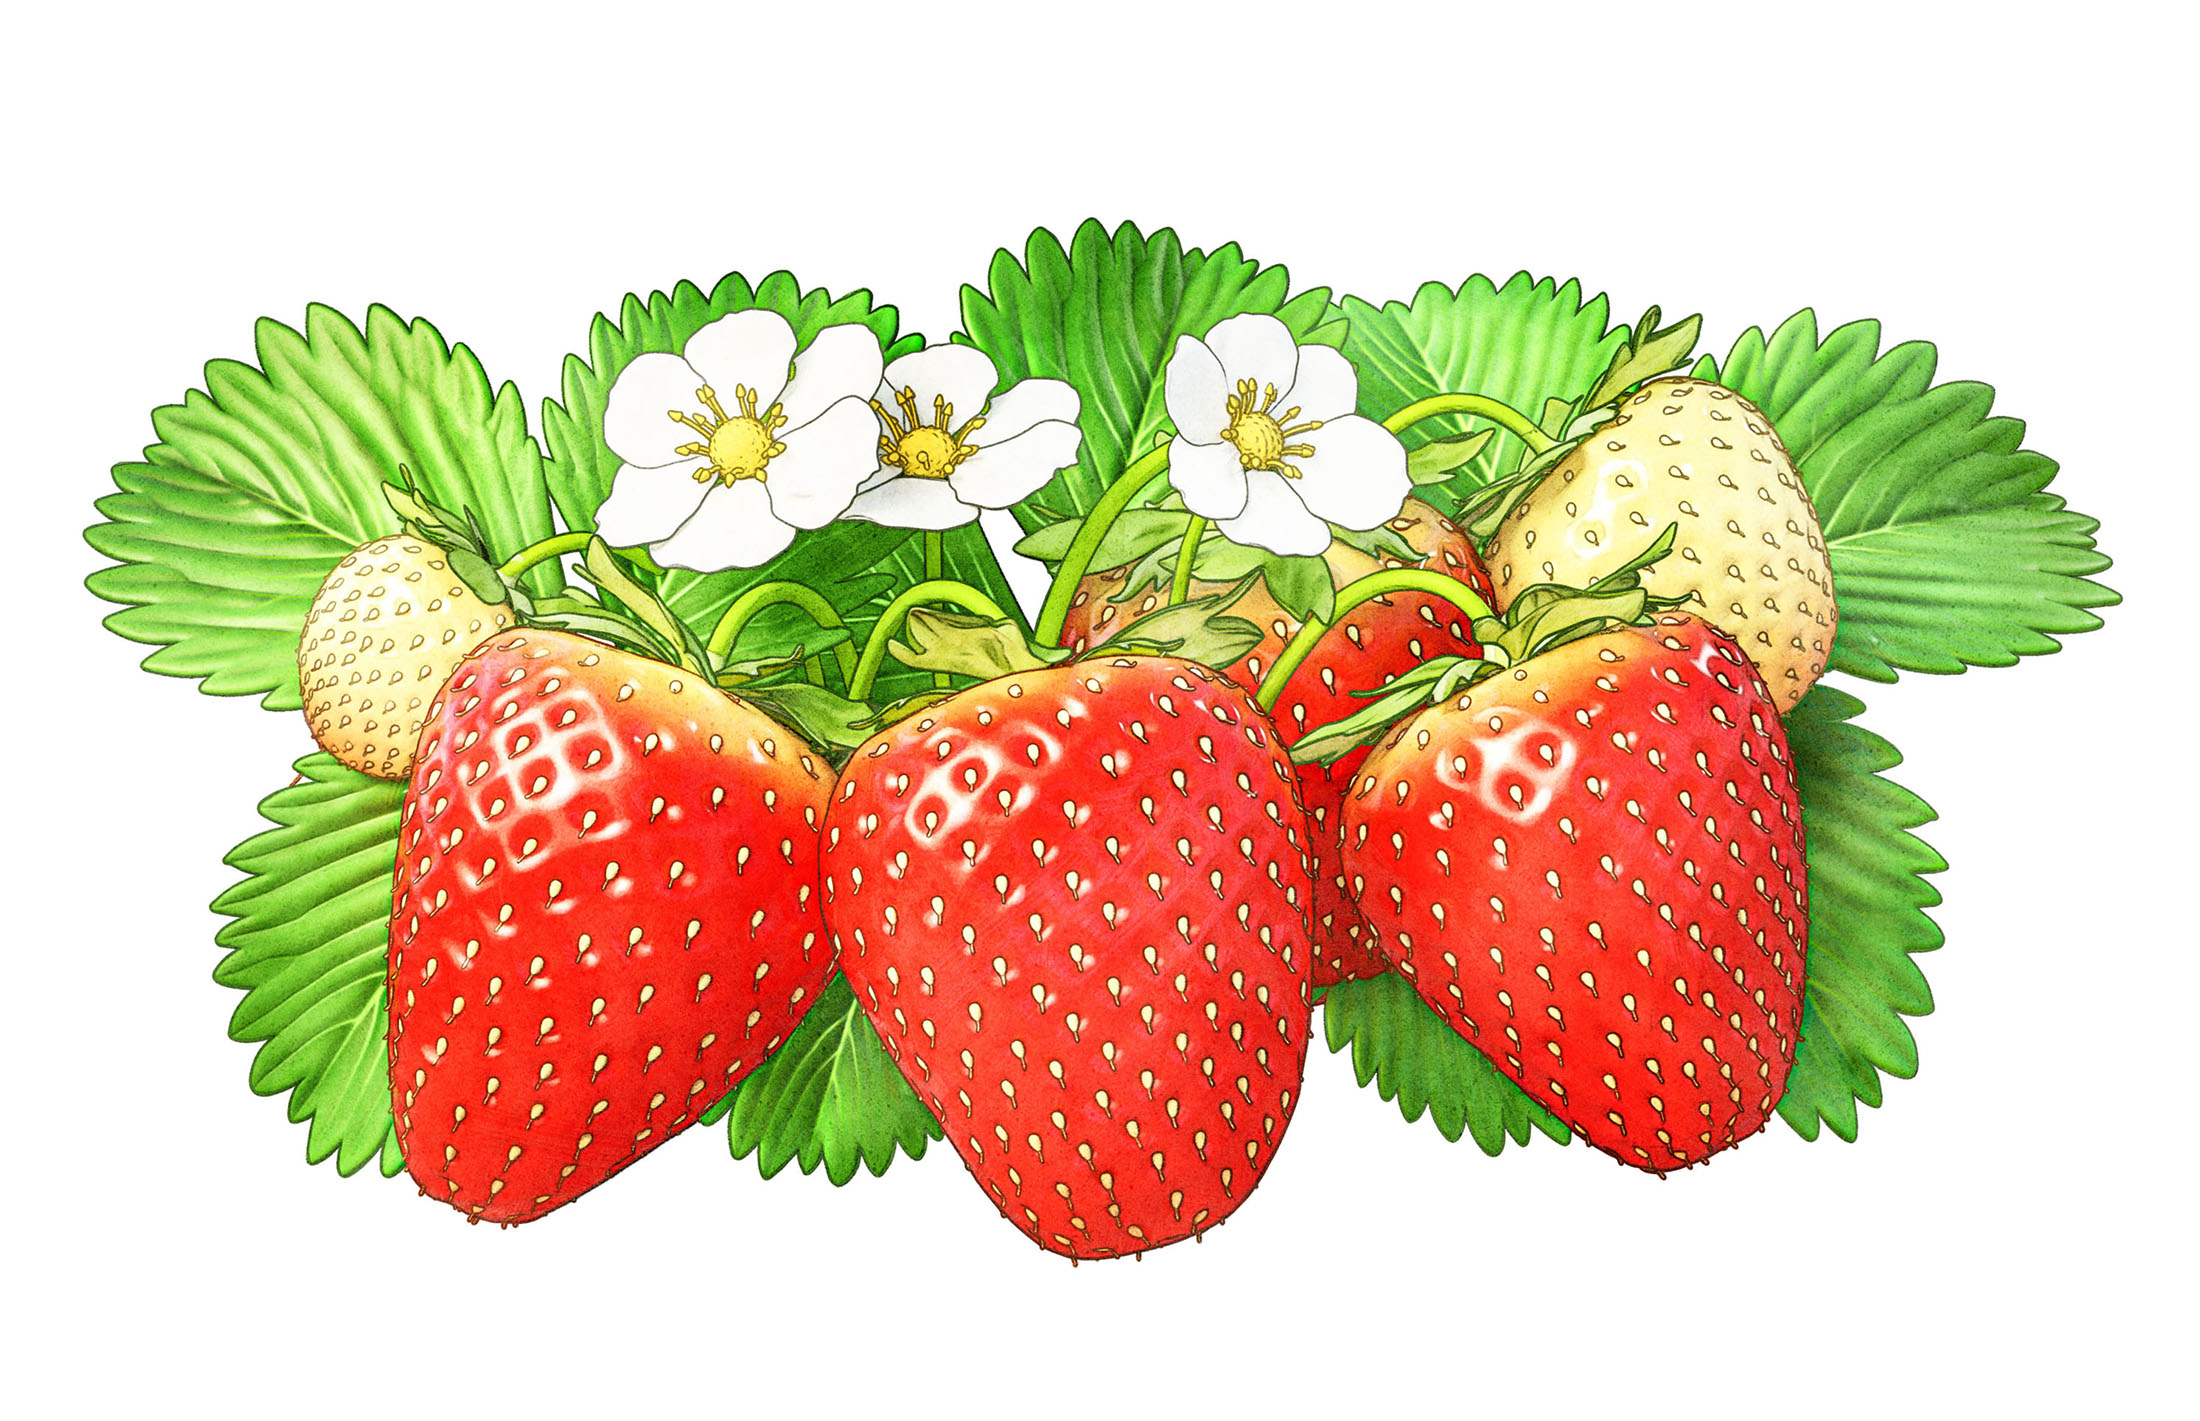 Wildberrys of sweden like strawberry raspberrys hallon jordgubbe jordgubbar skogsbär